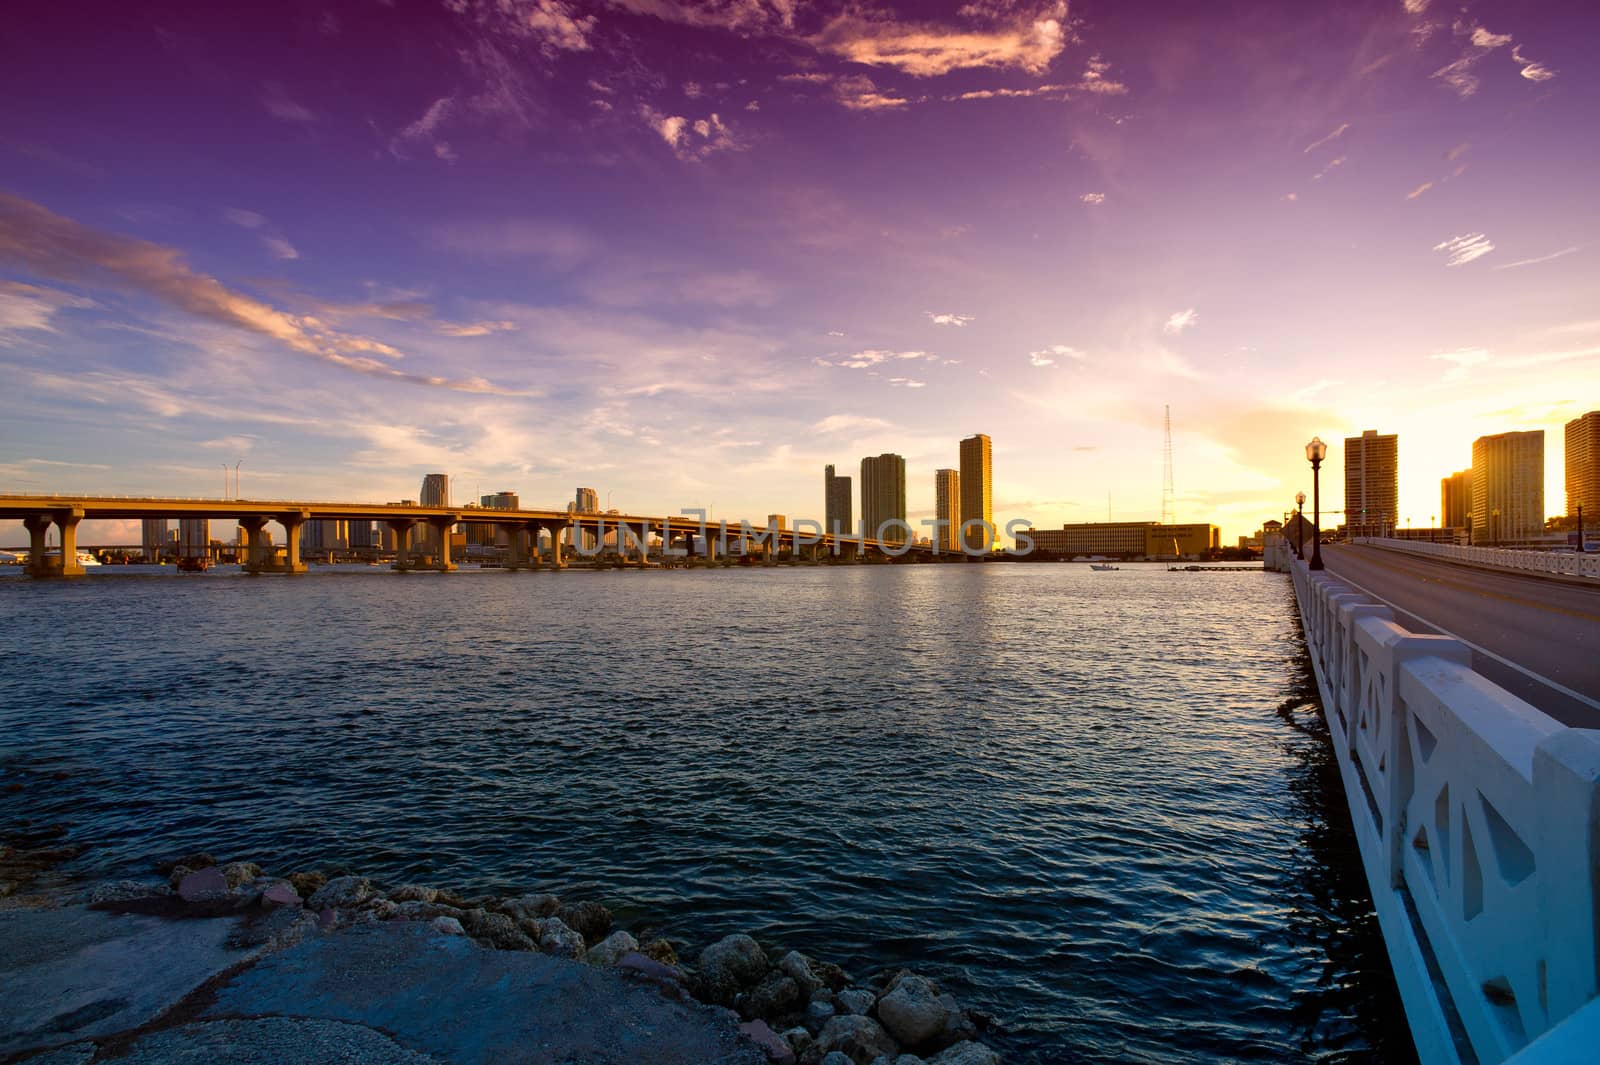 Bridge with skyscrapers in the background, Venetian Causeway, Venetian Islands, Biscayne Bay, Miami, Florida, USA